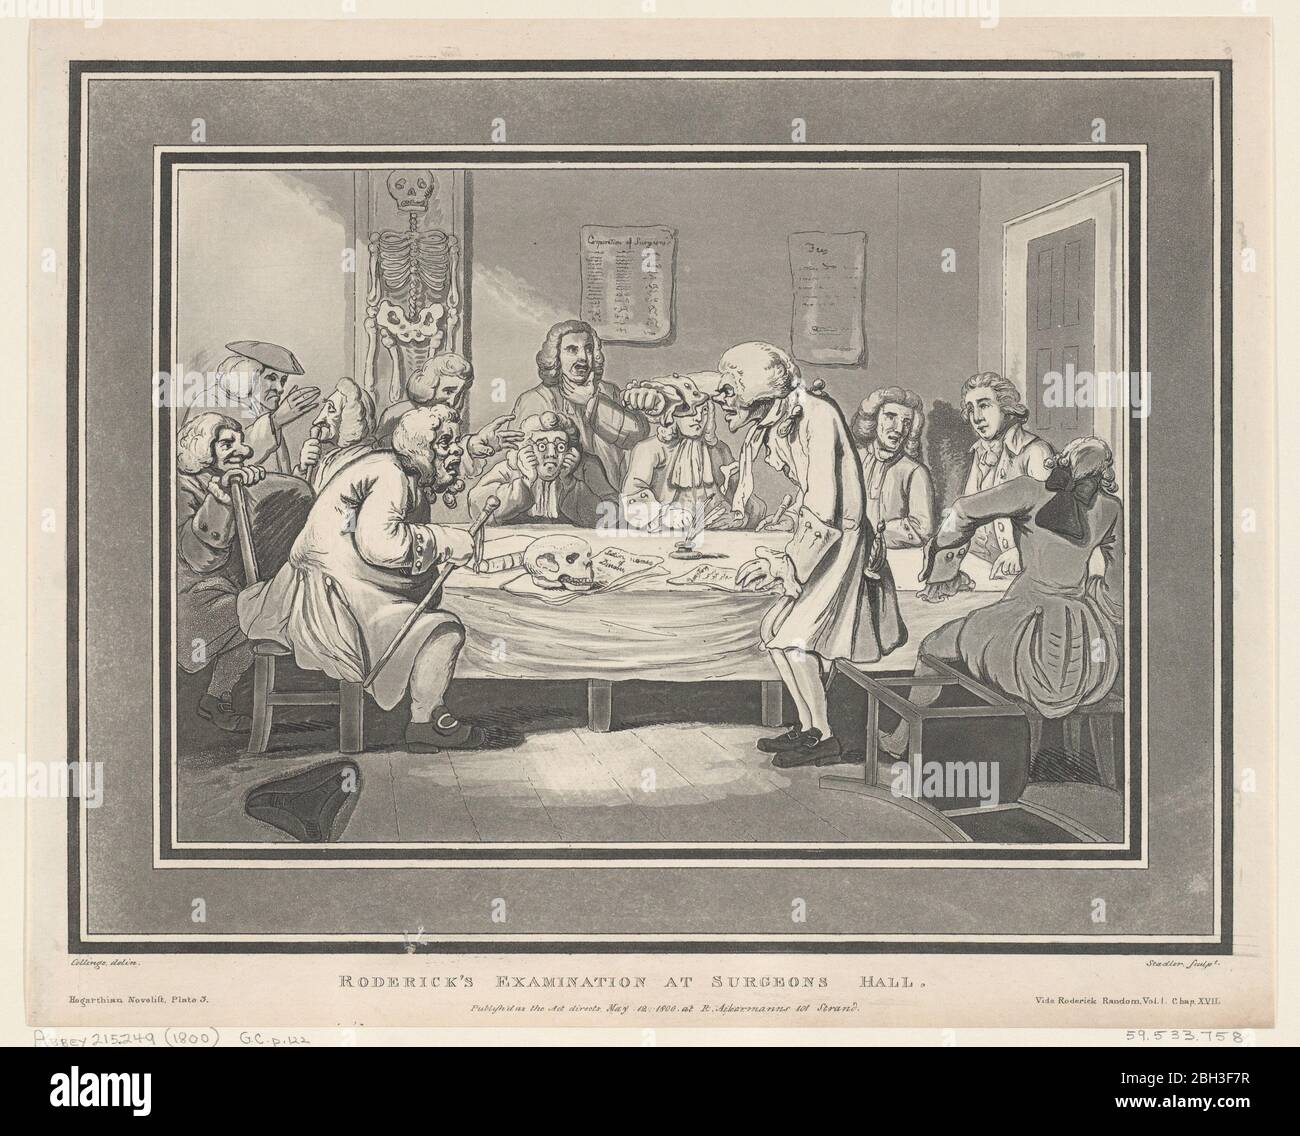 Roderick's Examination at Surgeon's Hall, May 12, 1800. Stock Photo